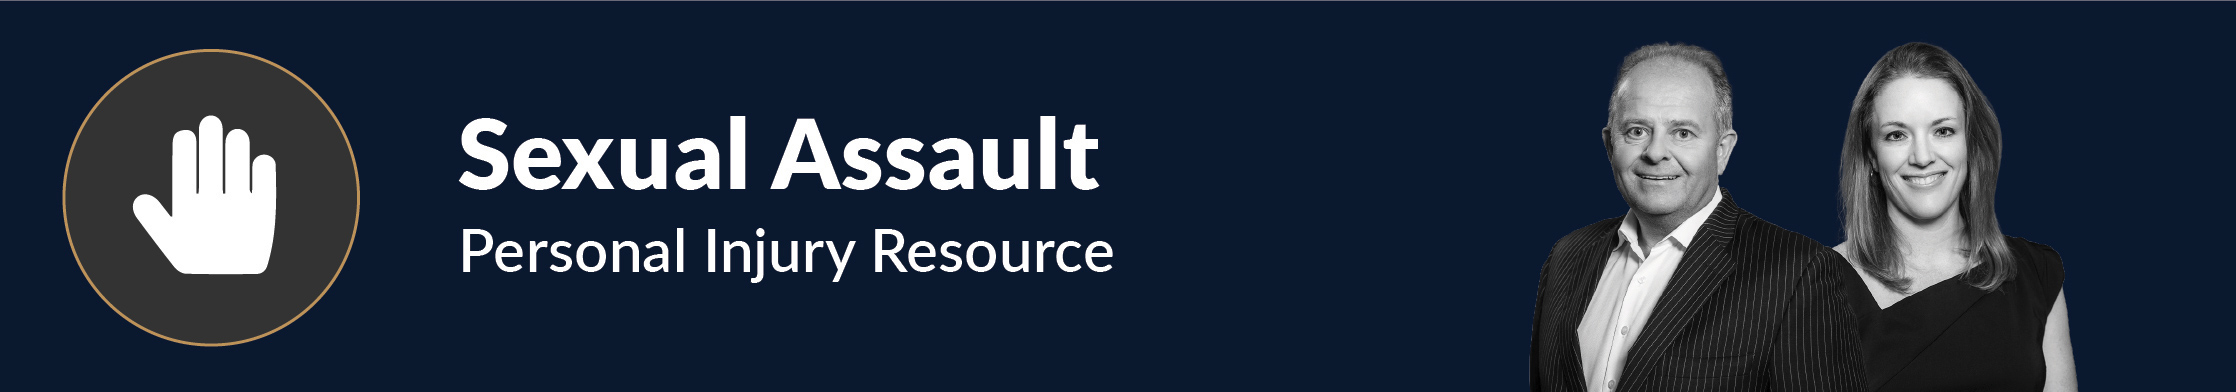 sexual assault resource